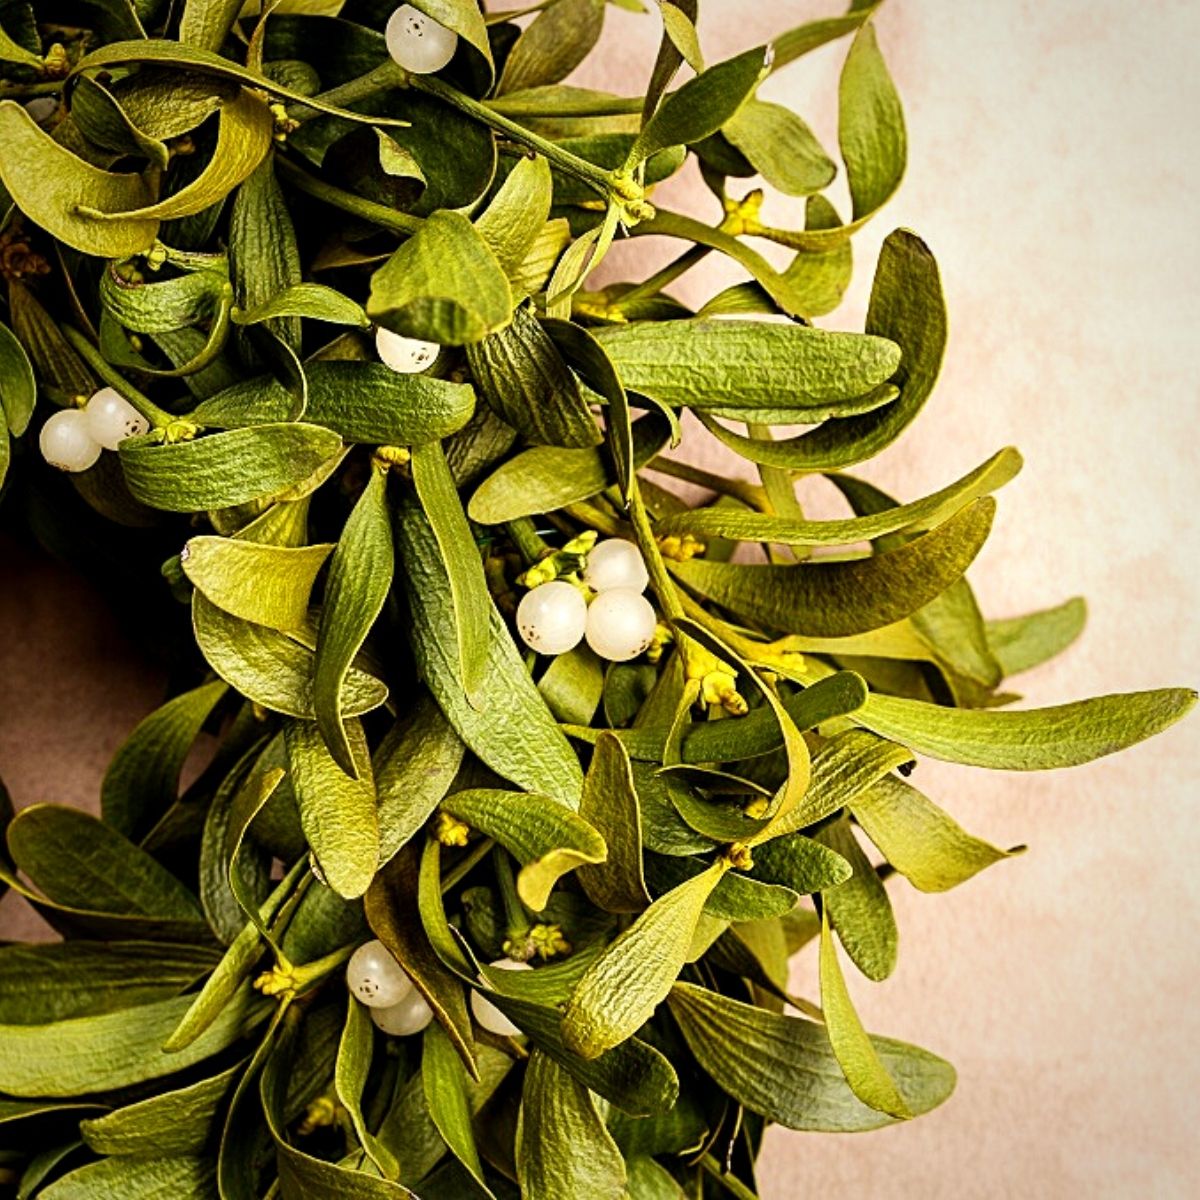 Mistletoe - The Famous Kissing Plant and Its Christmas Nuances